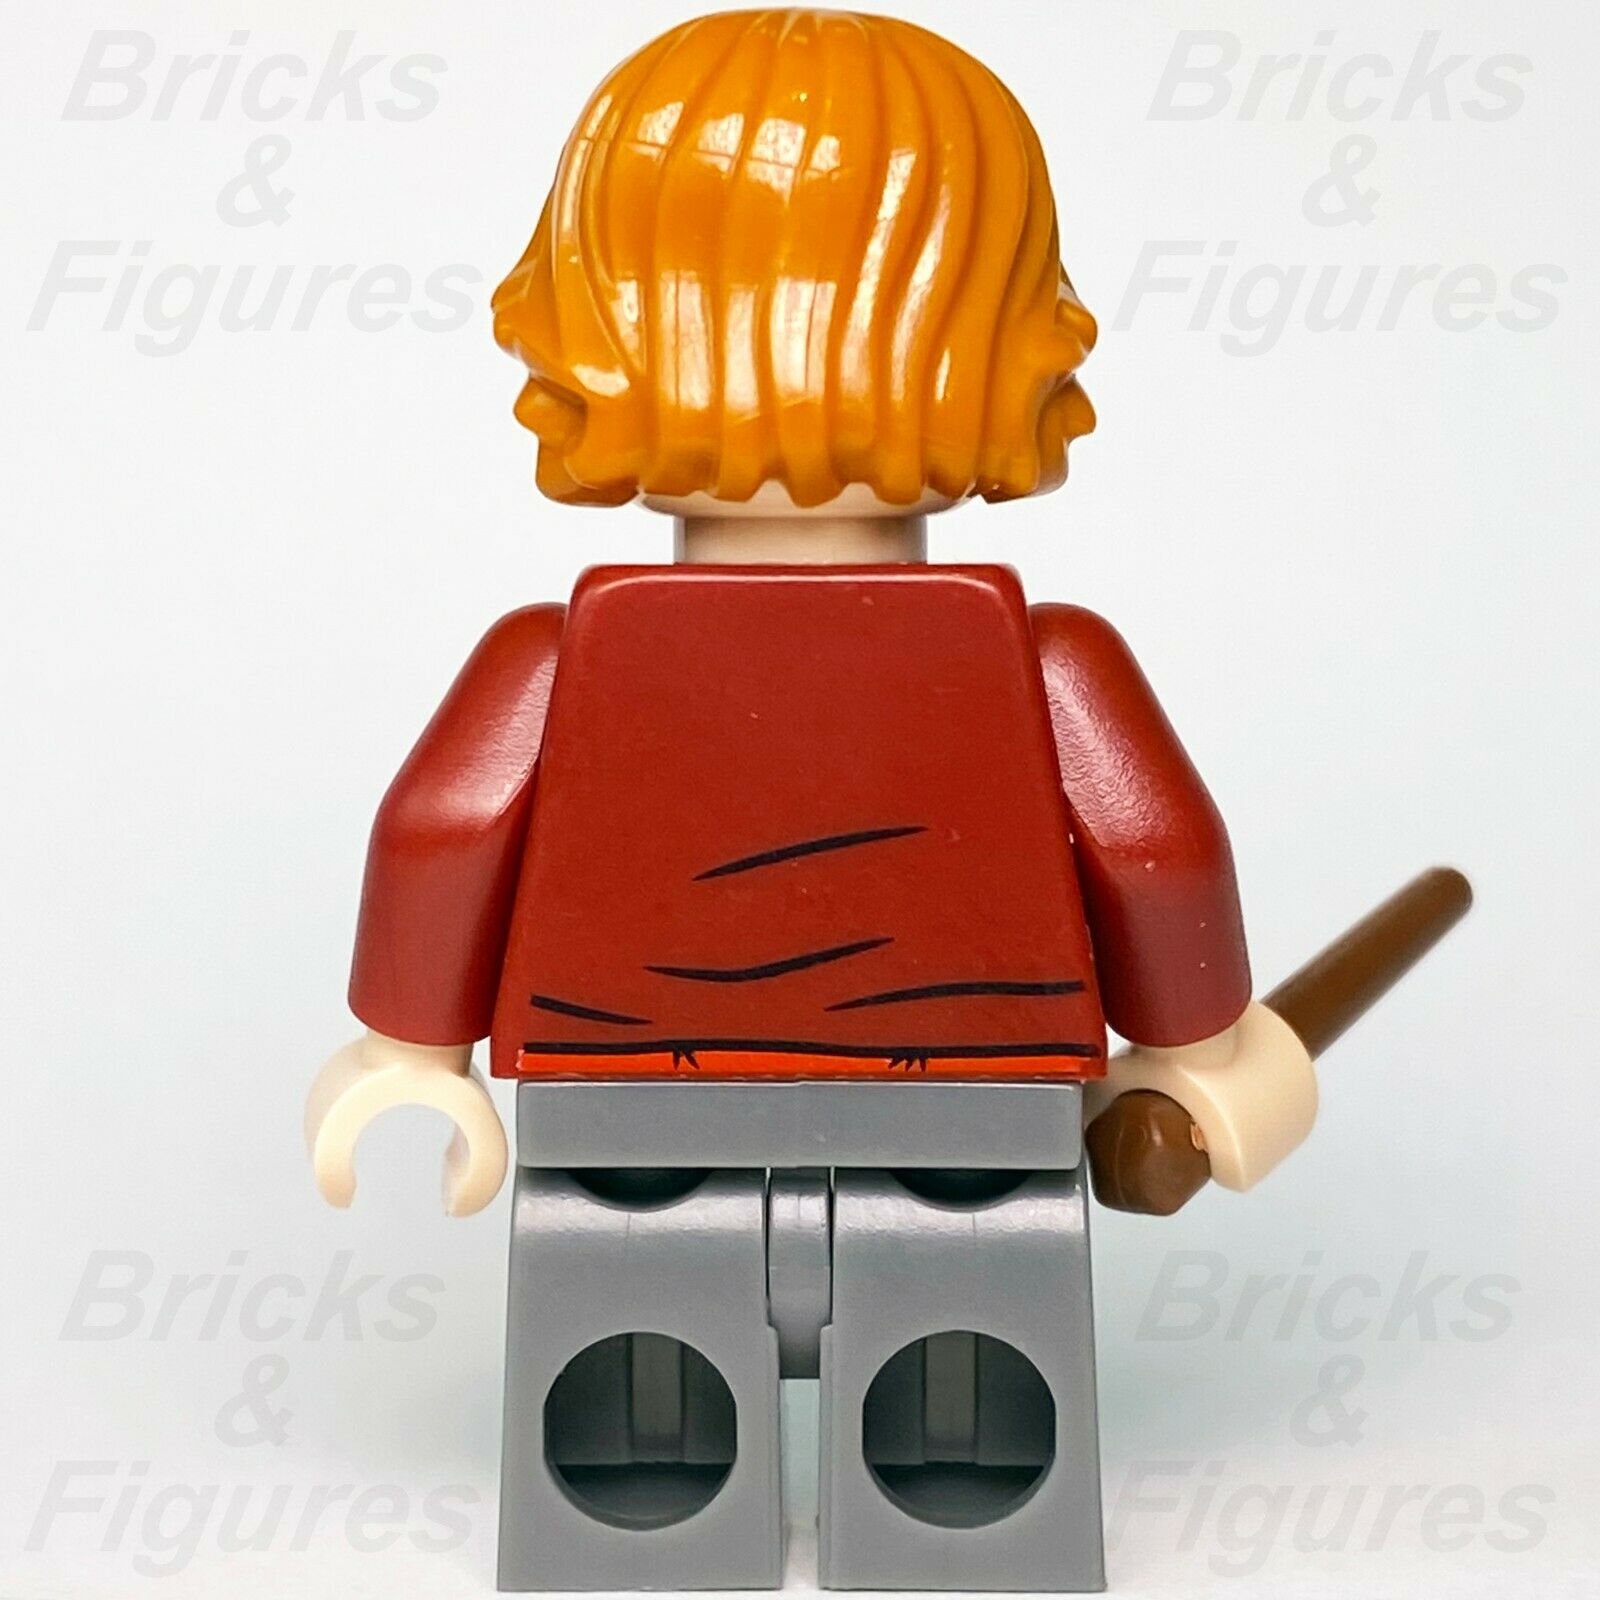 New Harry Potter LEGO Ron Weasley Wizard Prisoner of Azkaban Minifigure 75947 - Bricks & Figures